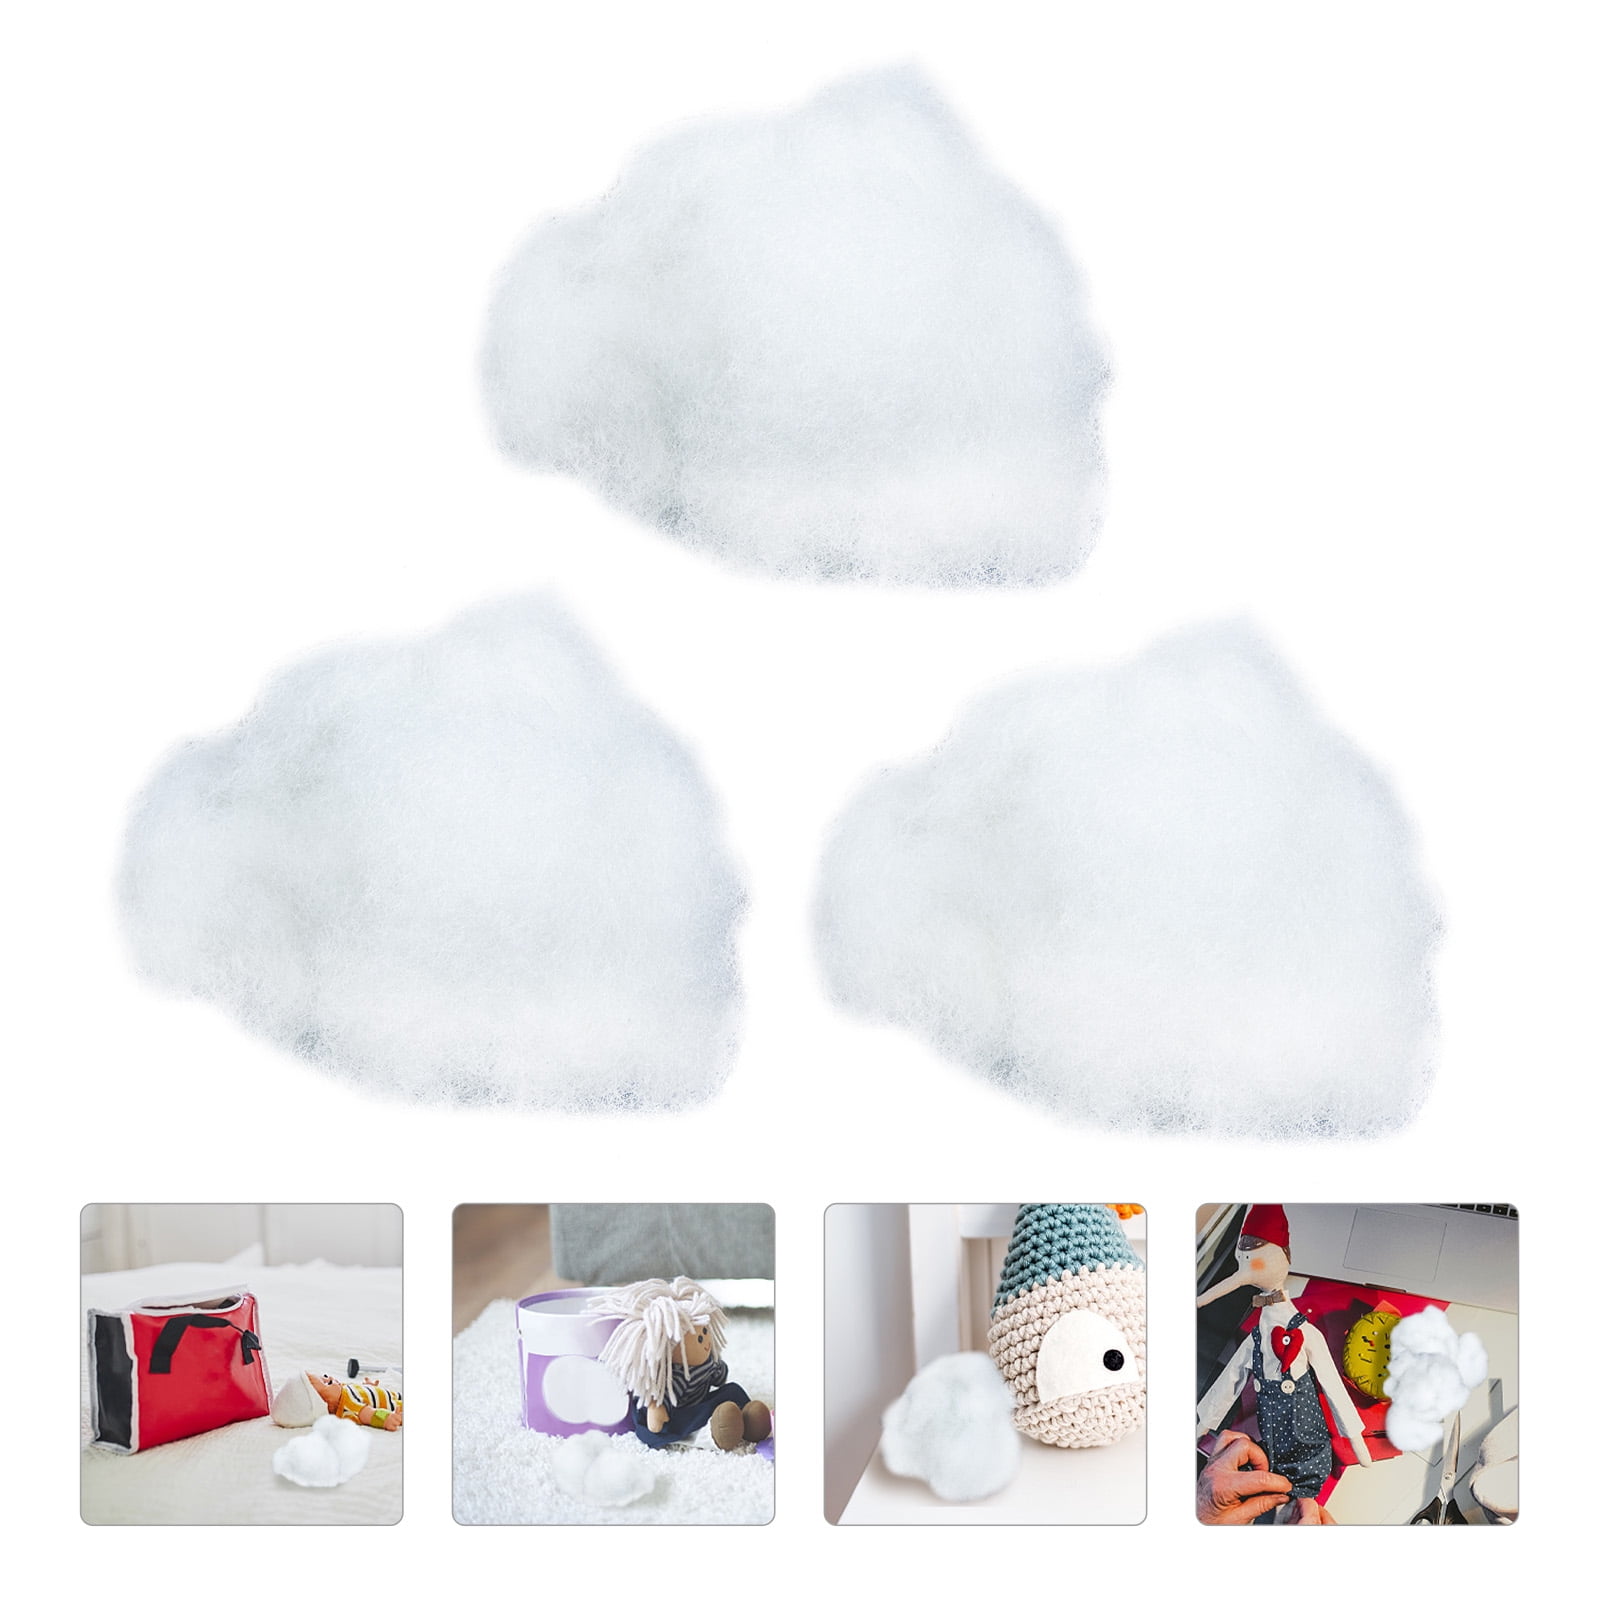 1kg High-elasticity Eco 3d Hollow Pp Cotton Wool Filler Stuffing For Throw  Pillow Plush Toys Dolls Bean Bag Sofa Bed Cushion Pad - Fiber - AliExpress